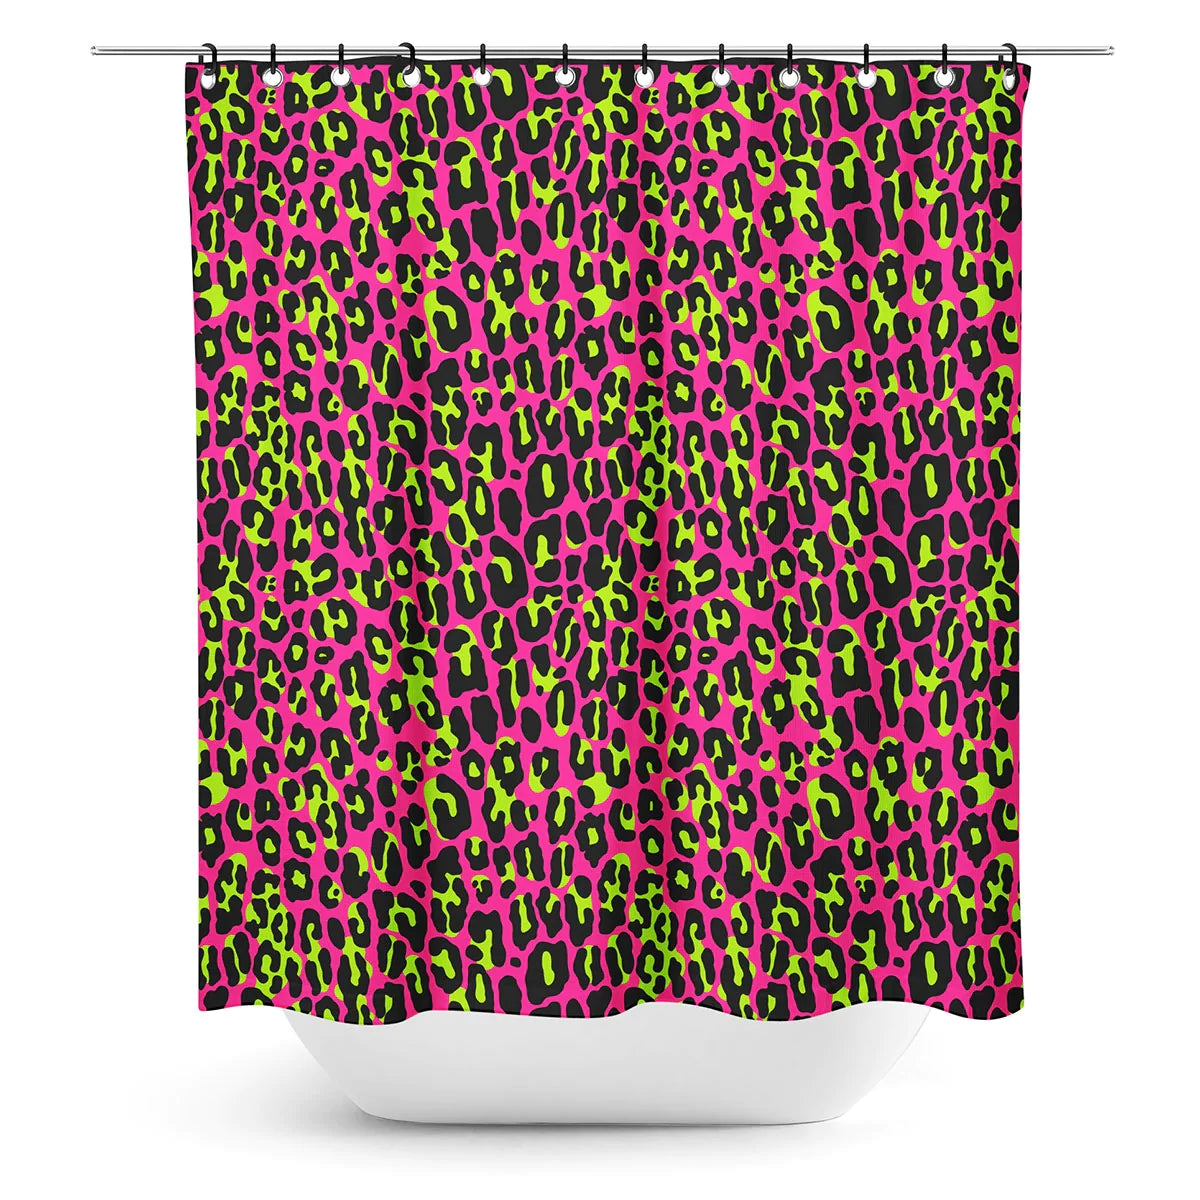 Shower Curtain - Electric Leopard